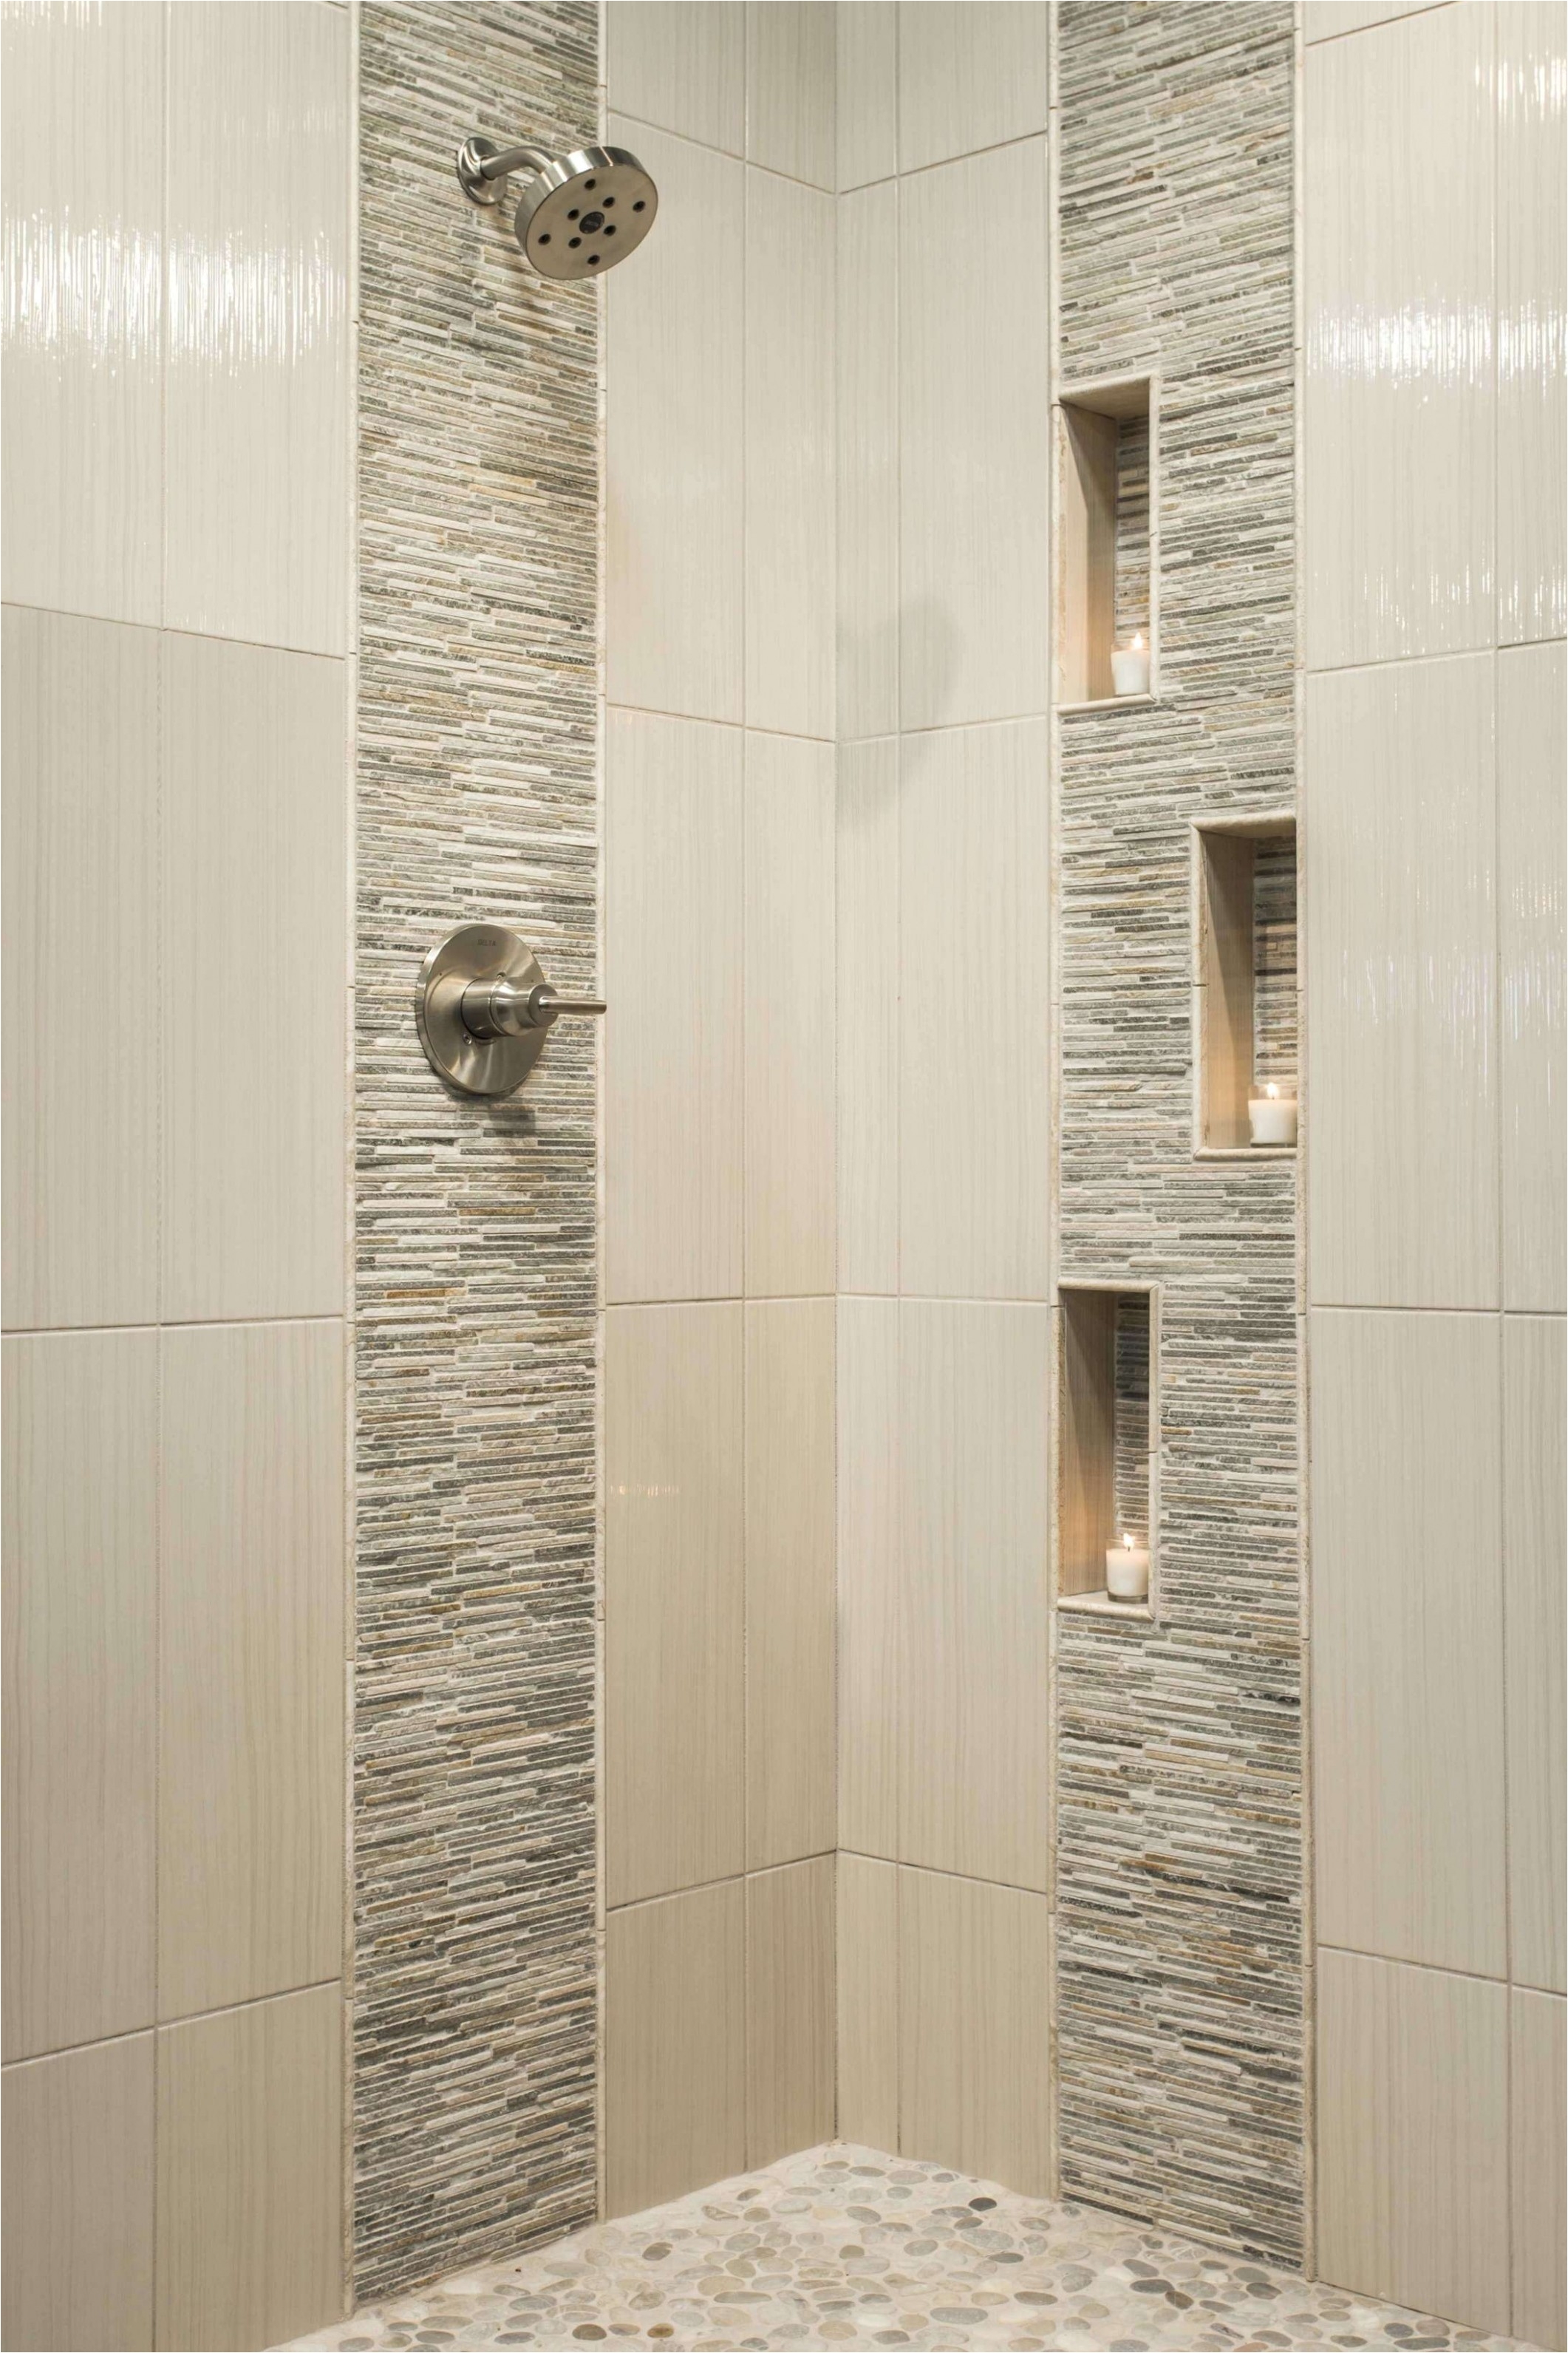 Bathroom Design Tiling Ideas Bathroom Flooring Tile Ideas New Bathroom Floor Tiles Design Valid